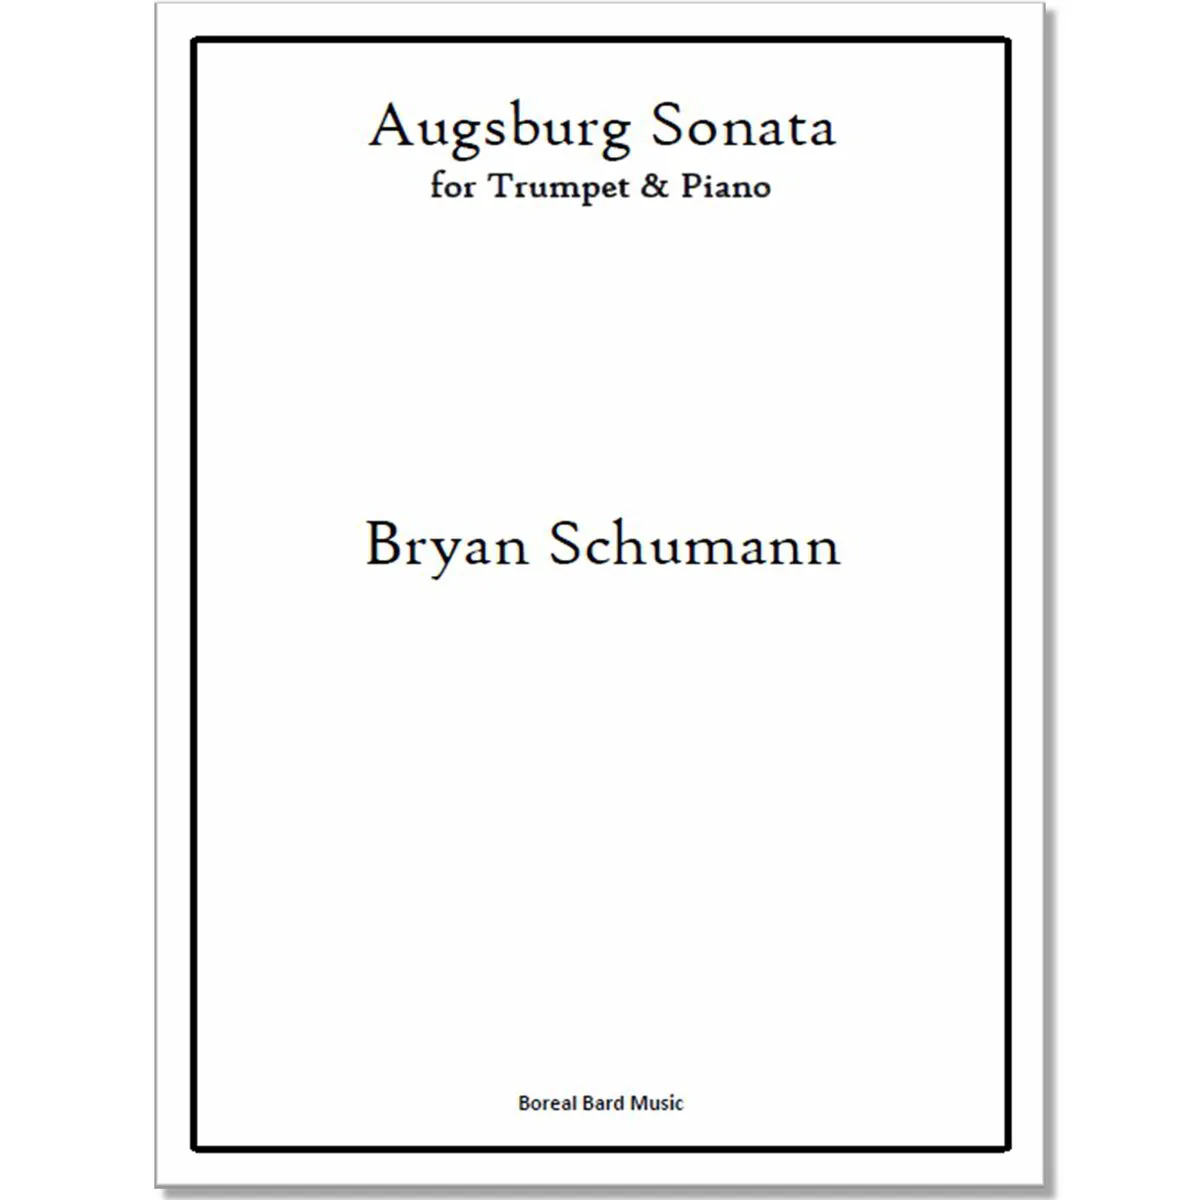 Augsburg Sonata for Trumpet & Piano (sheet music)